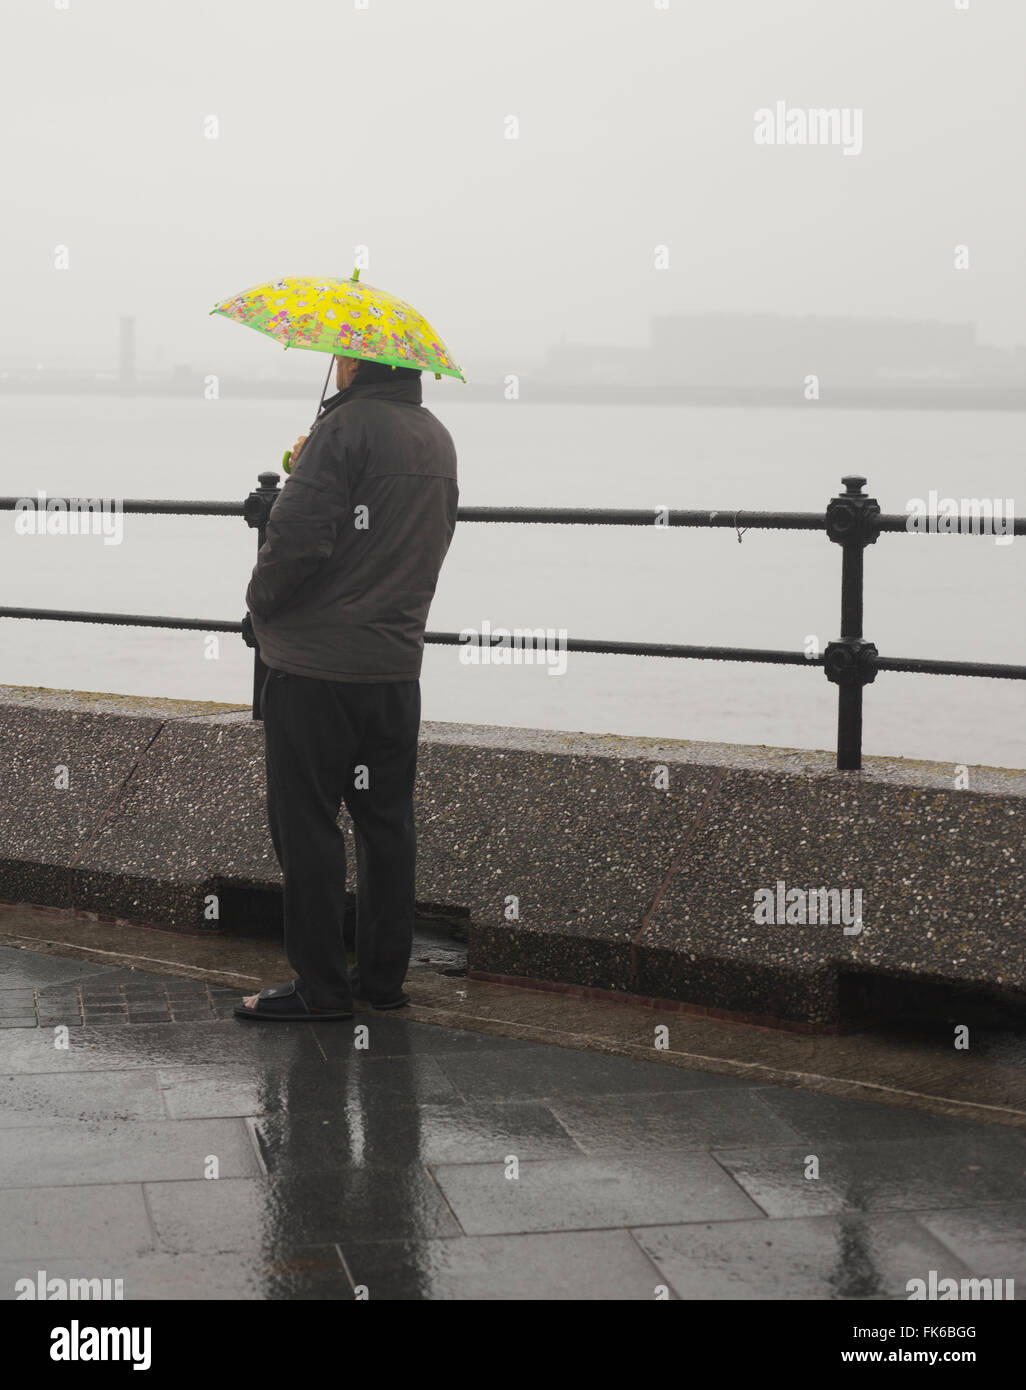 A man waits in the rain under a childs umbrella, United Kingdom, Europe Stock Photo